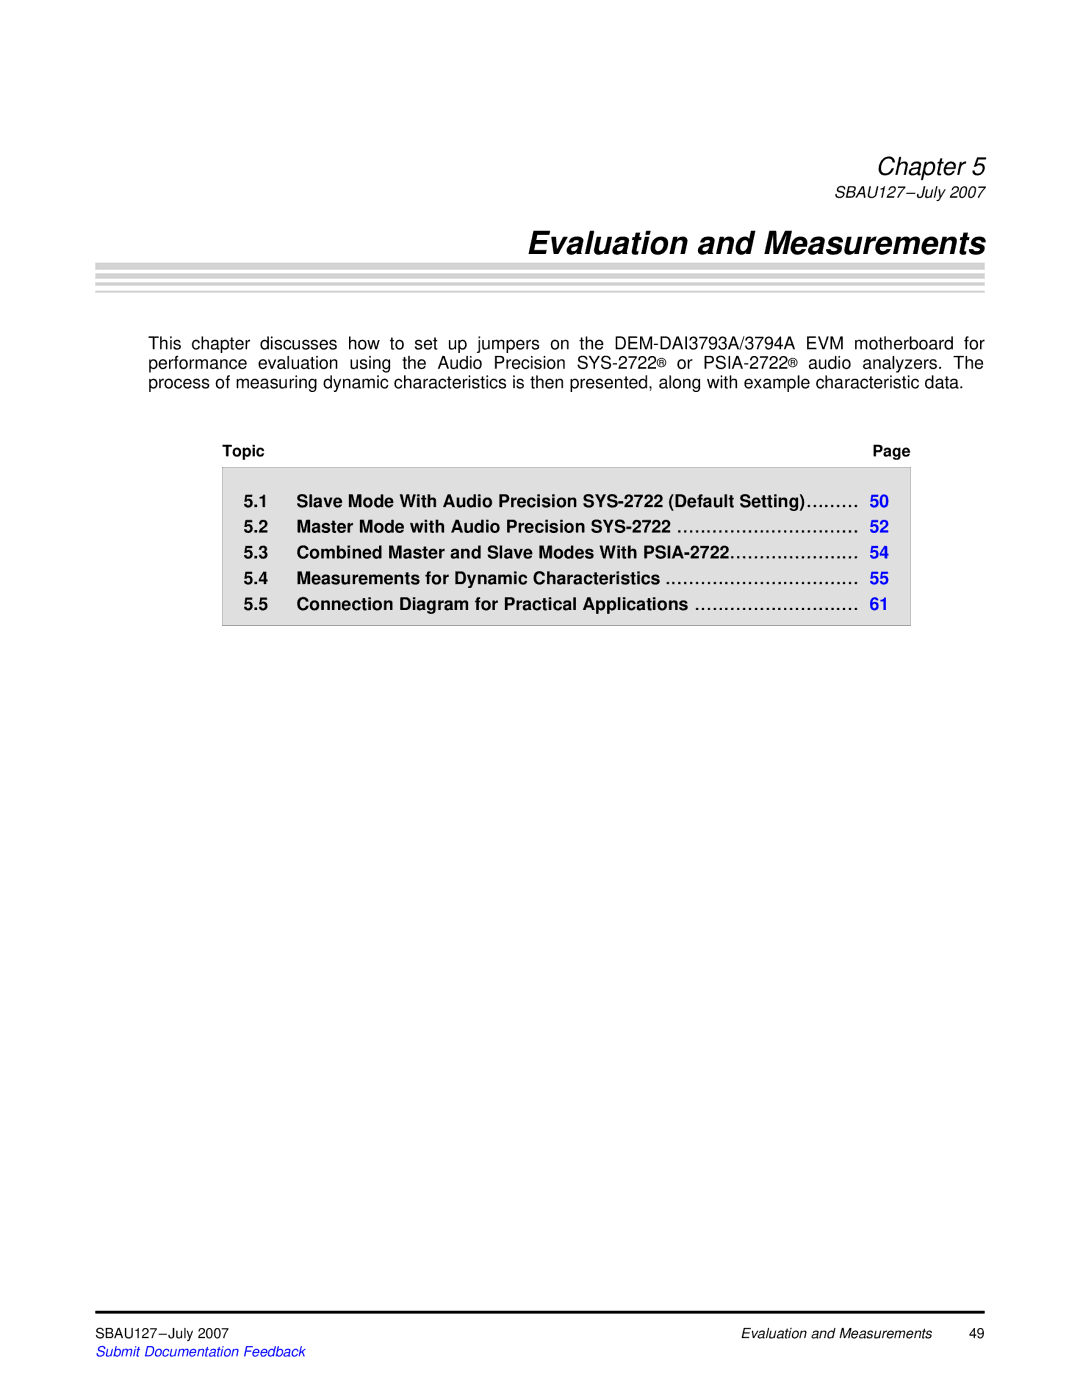 Texas Instruments DEM-DAI3793A manual Evaluation and Measurements 